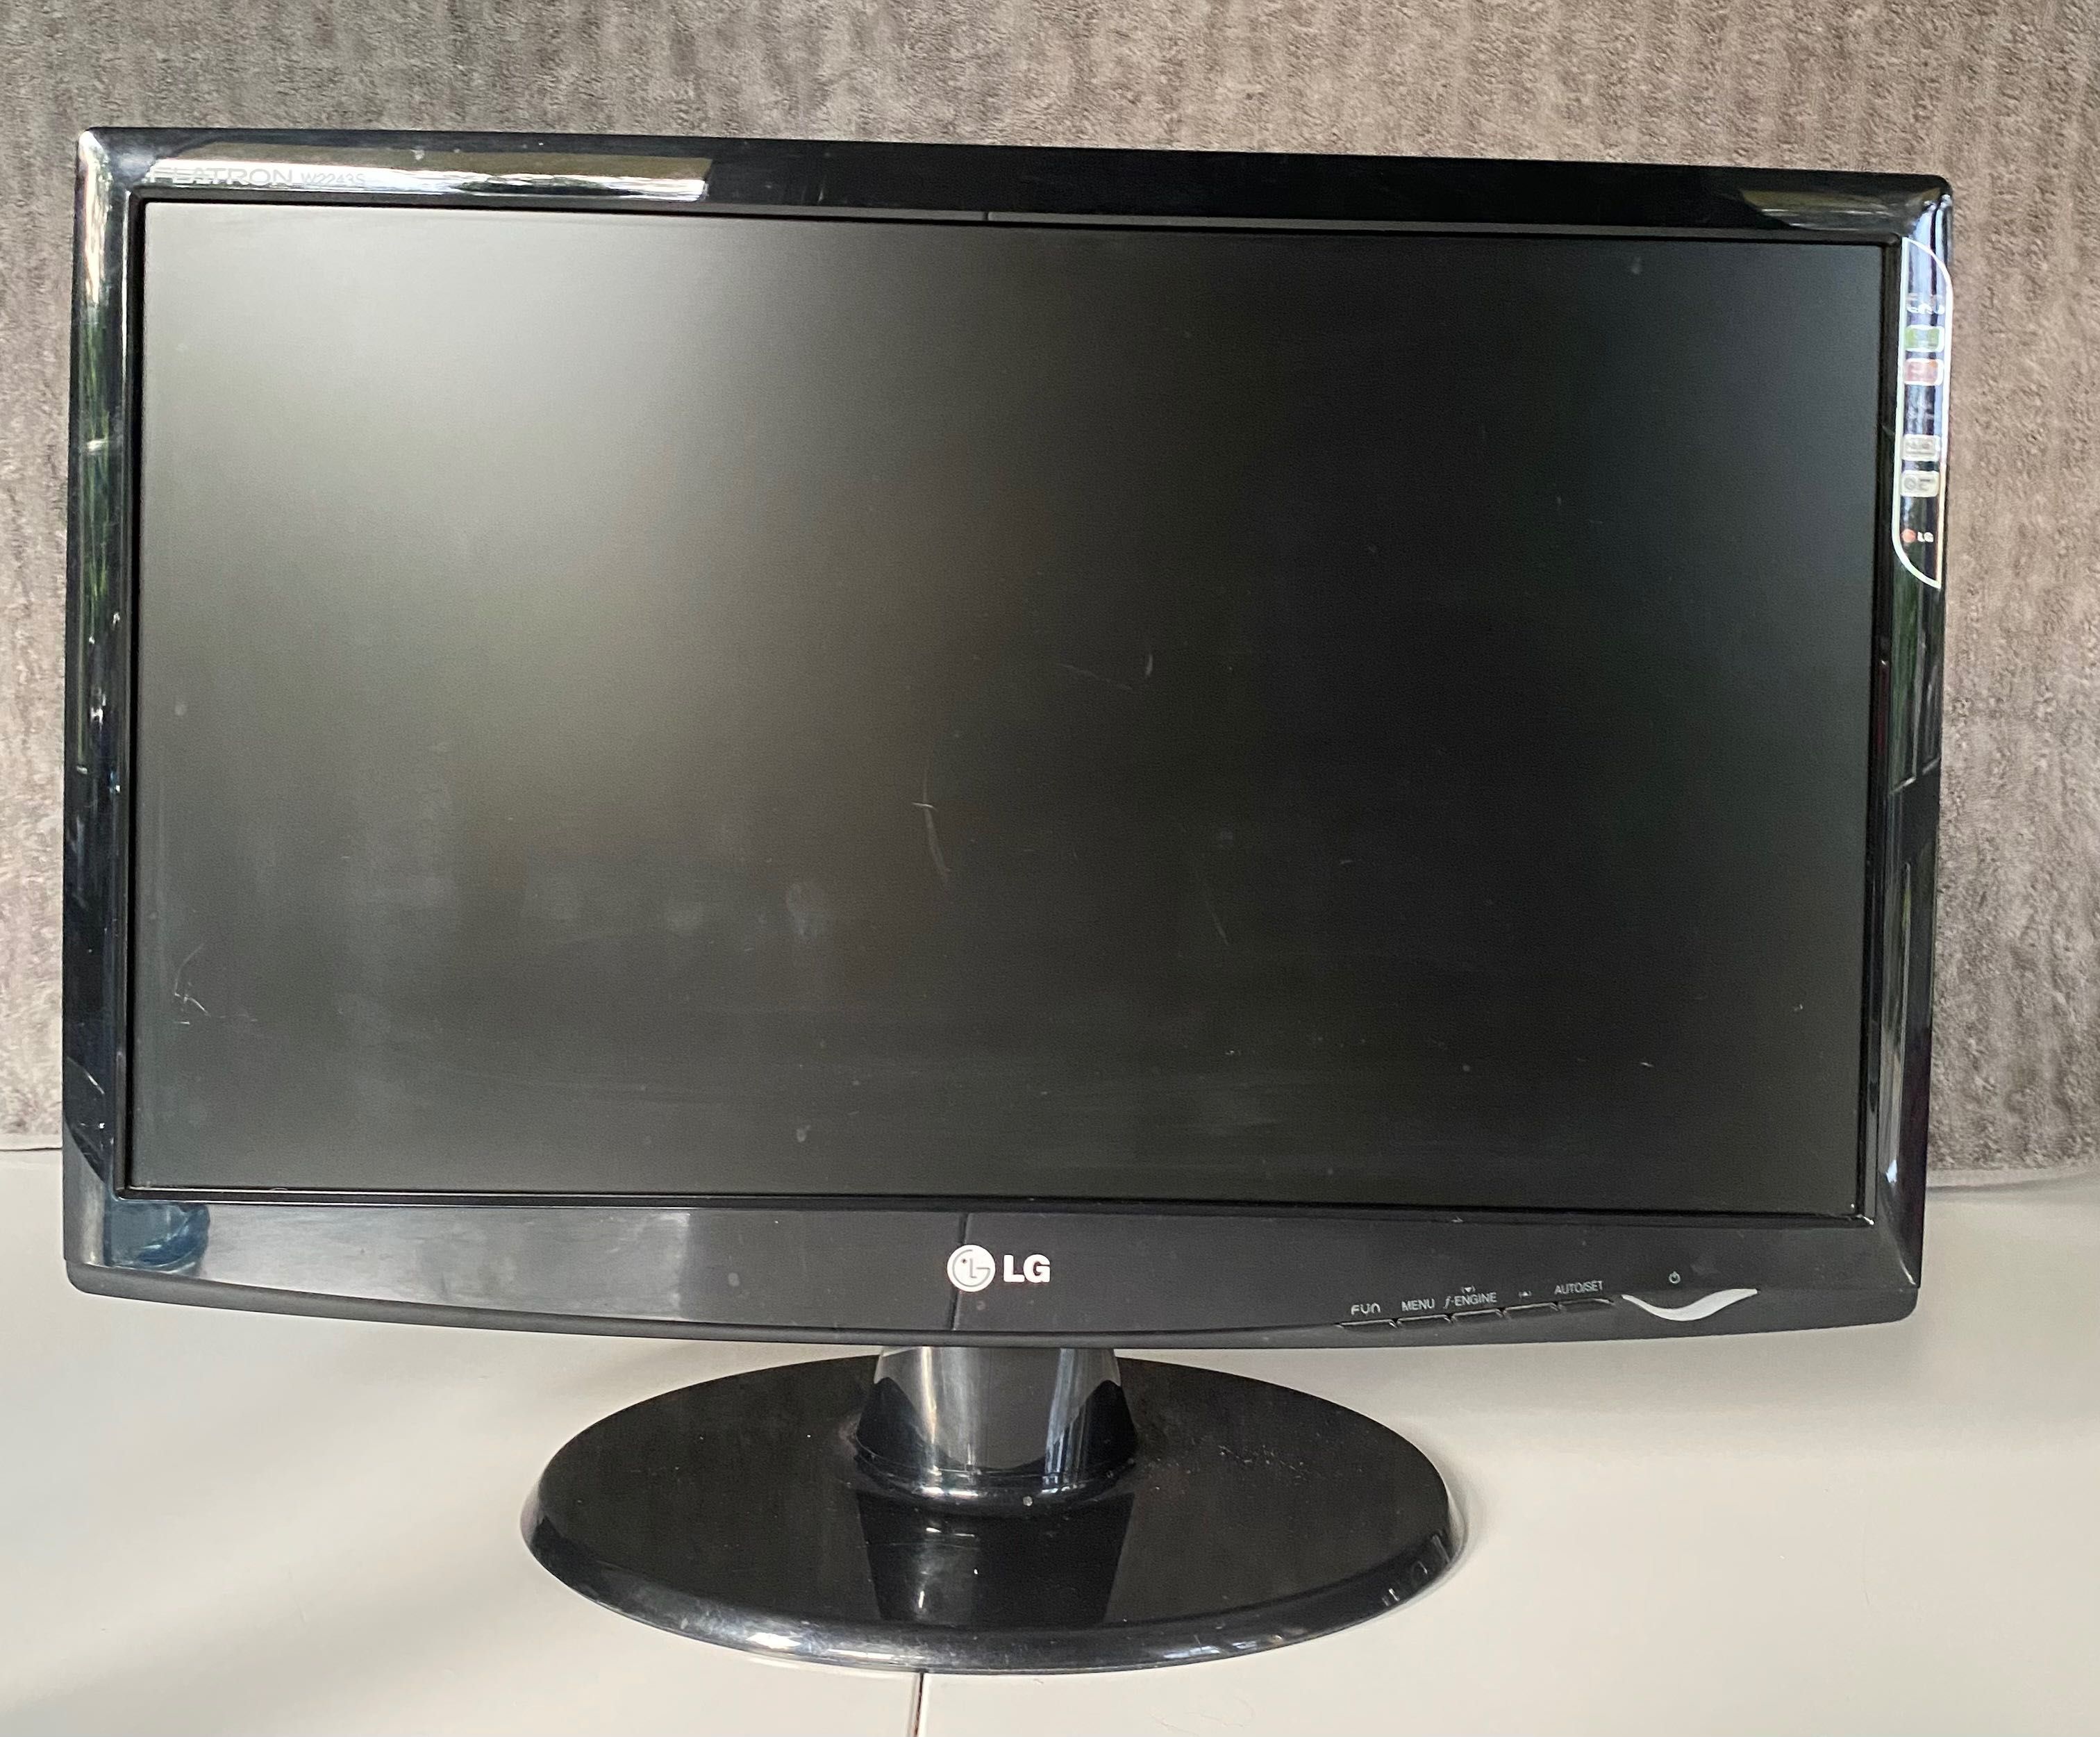 Monitor LG Flatron W2243S